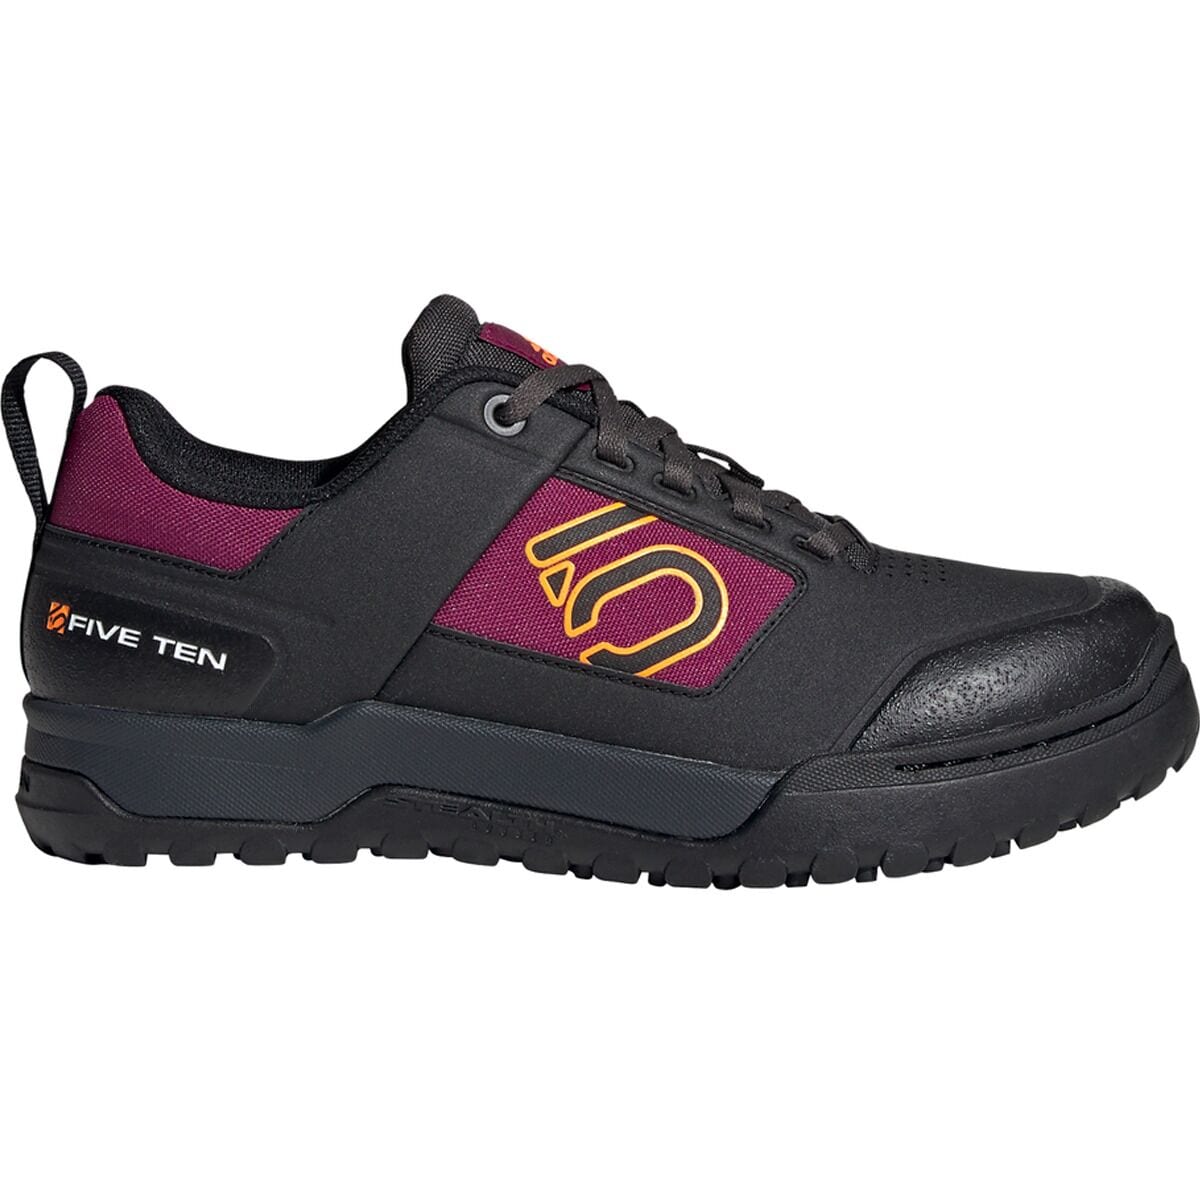 Five Ten Impact Pro Shoe - Women's Core Black/Signal Orange/Power Berry, 8.0